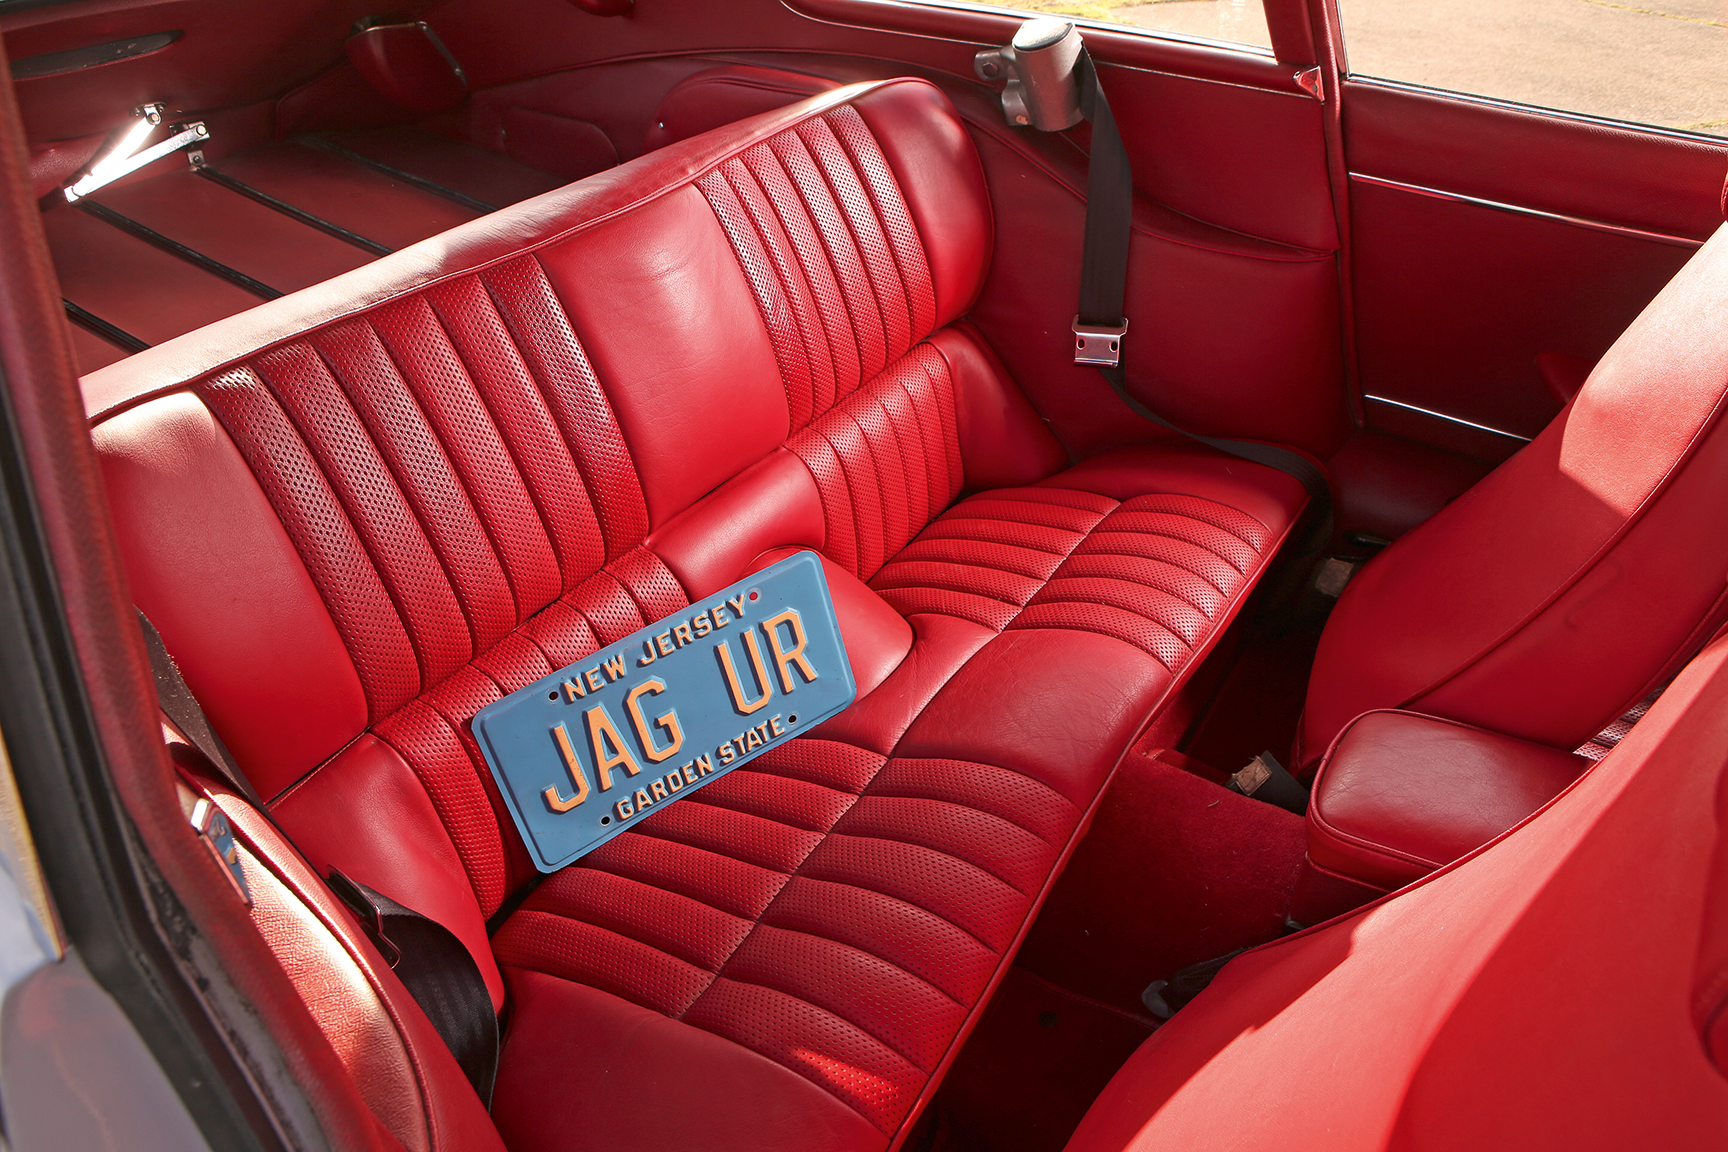 Meet the 'Ghost' E-type: Jaguar's missing link